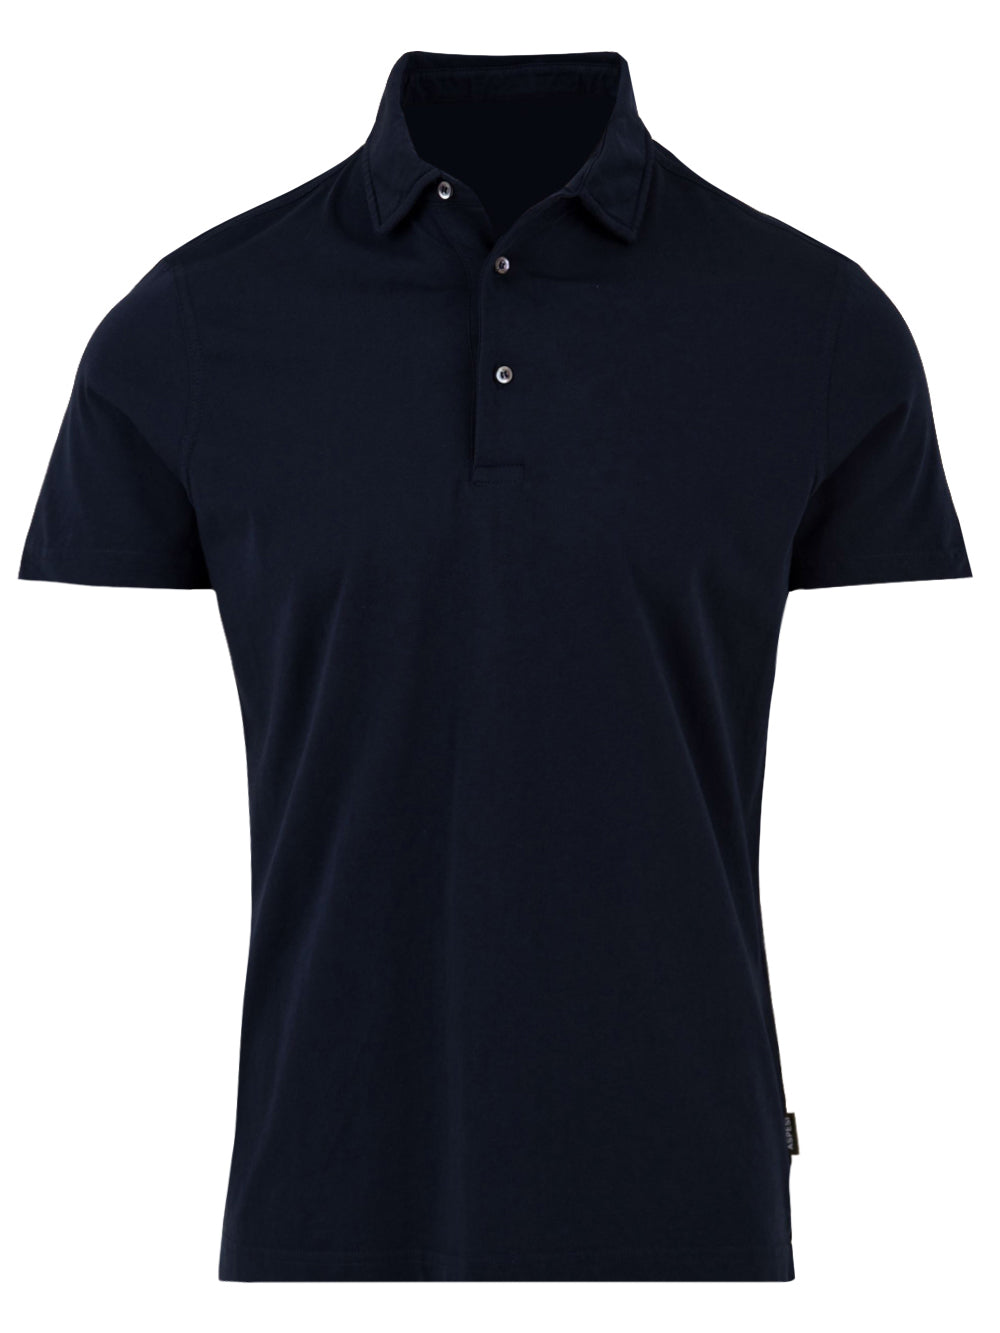 Men's polo shirt in plain cotton jersey